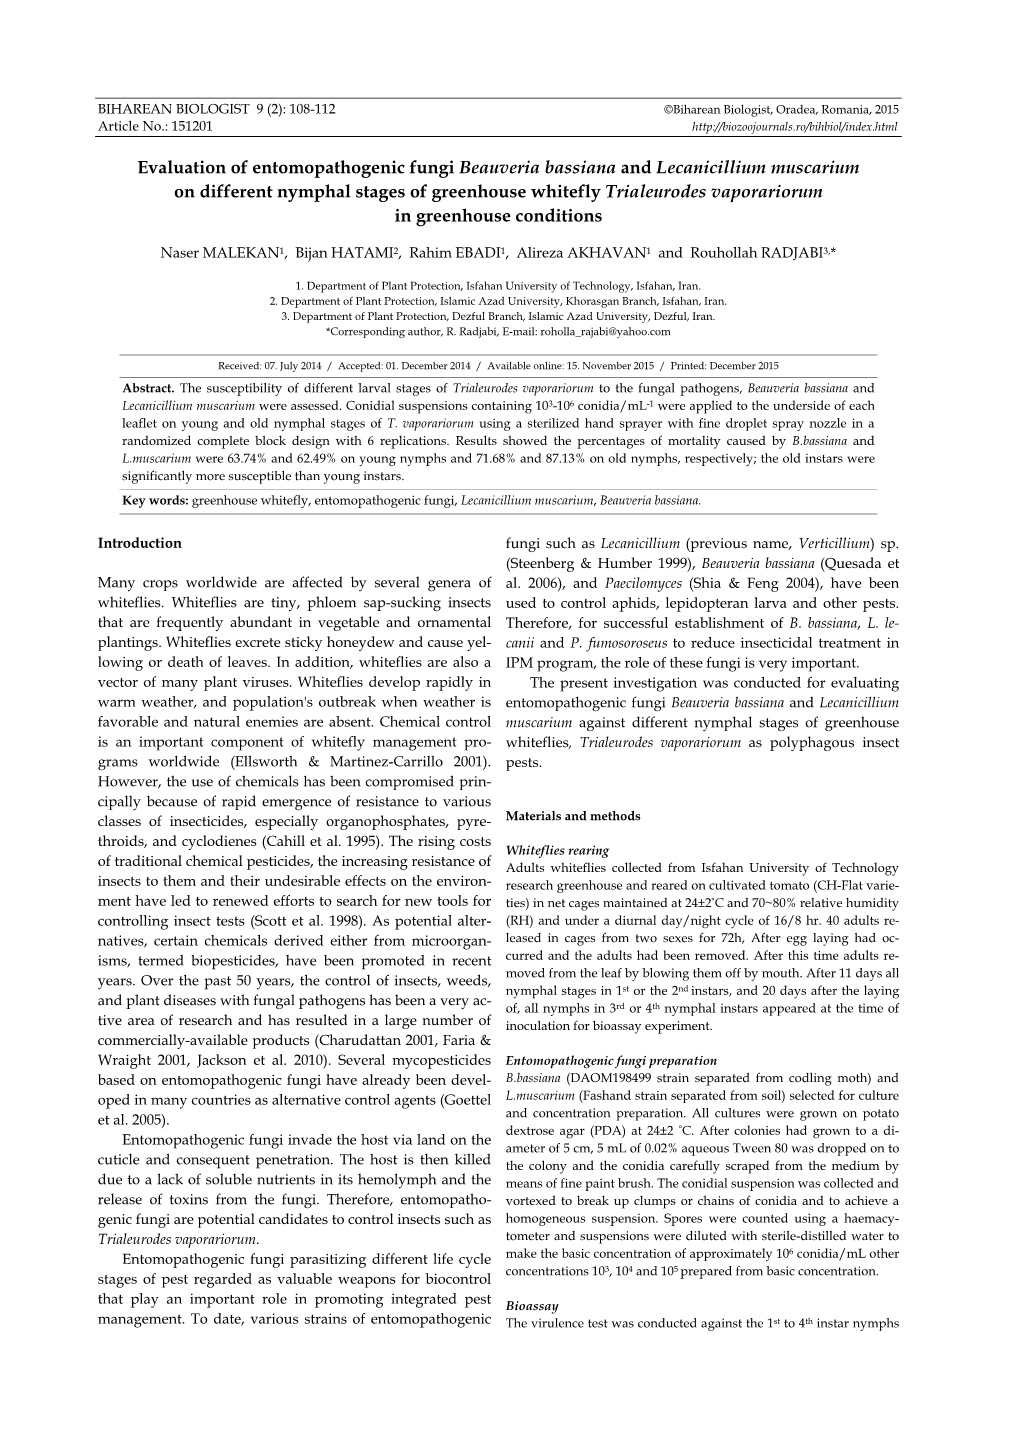 Evaluation of Entomopathogenic Fungi Beauveria Bassiana And